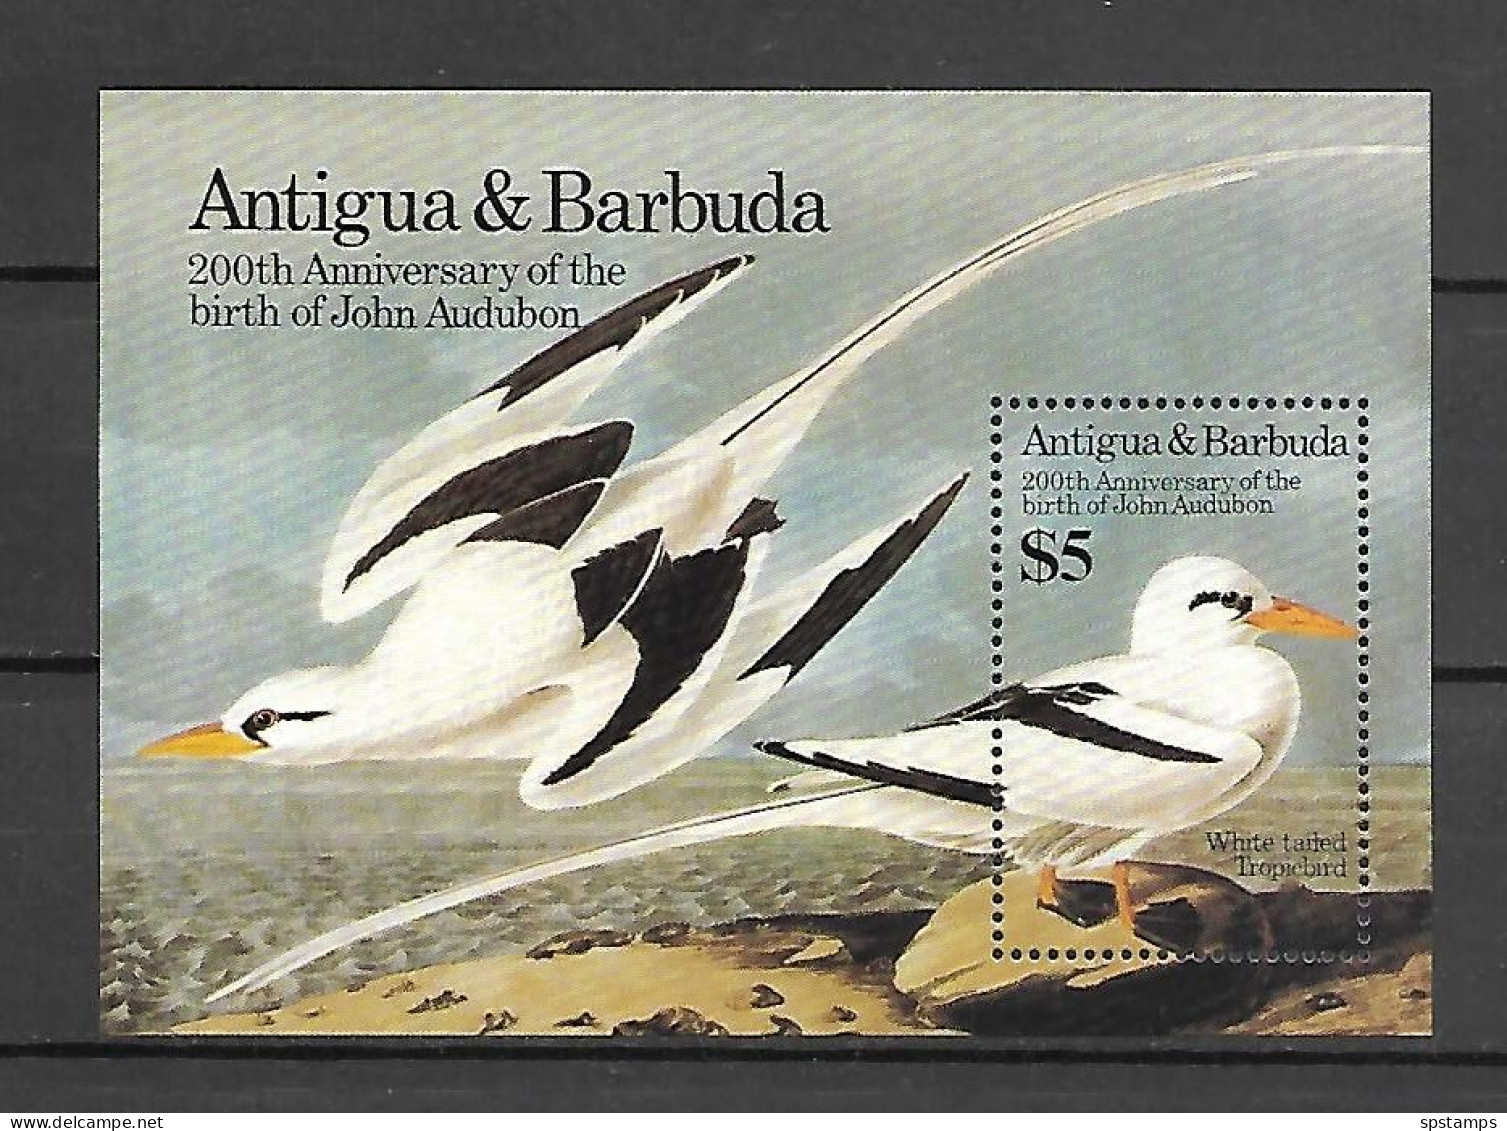 Antigua & Barbuda 1985 Birds - John James Audubon MS MNH - Antigua En Barbuda (1981-...)